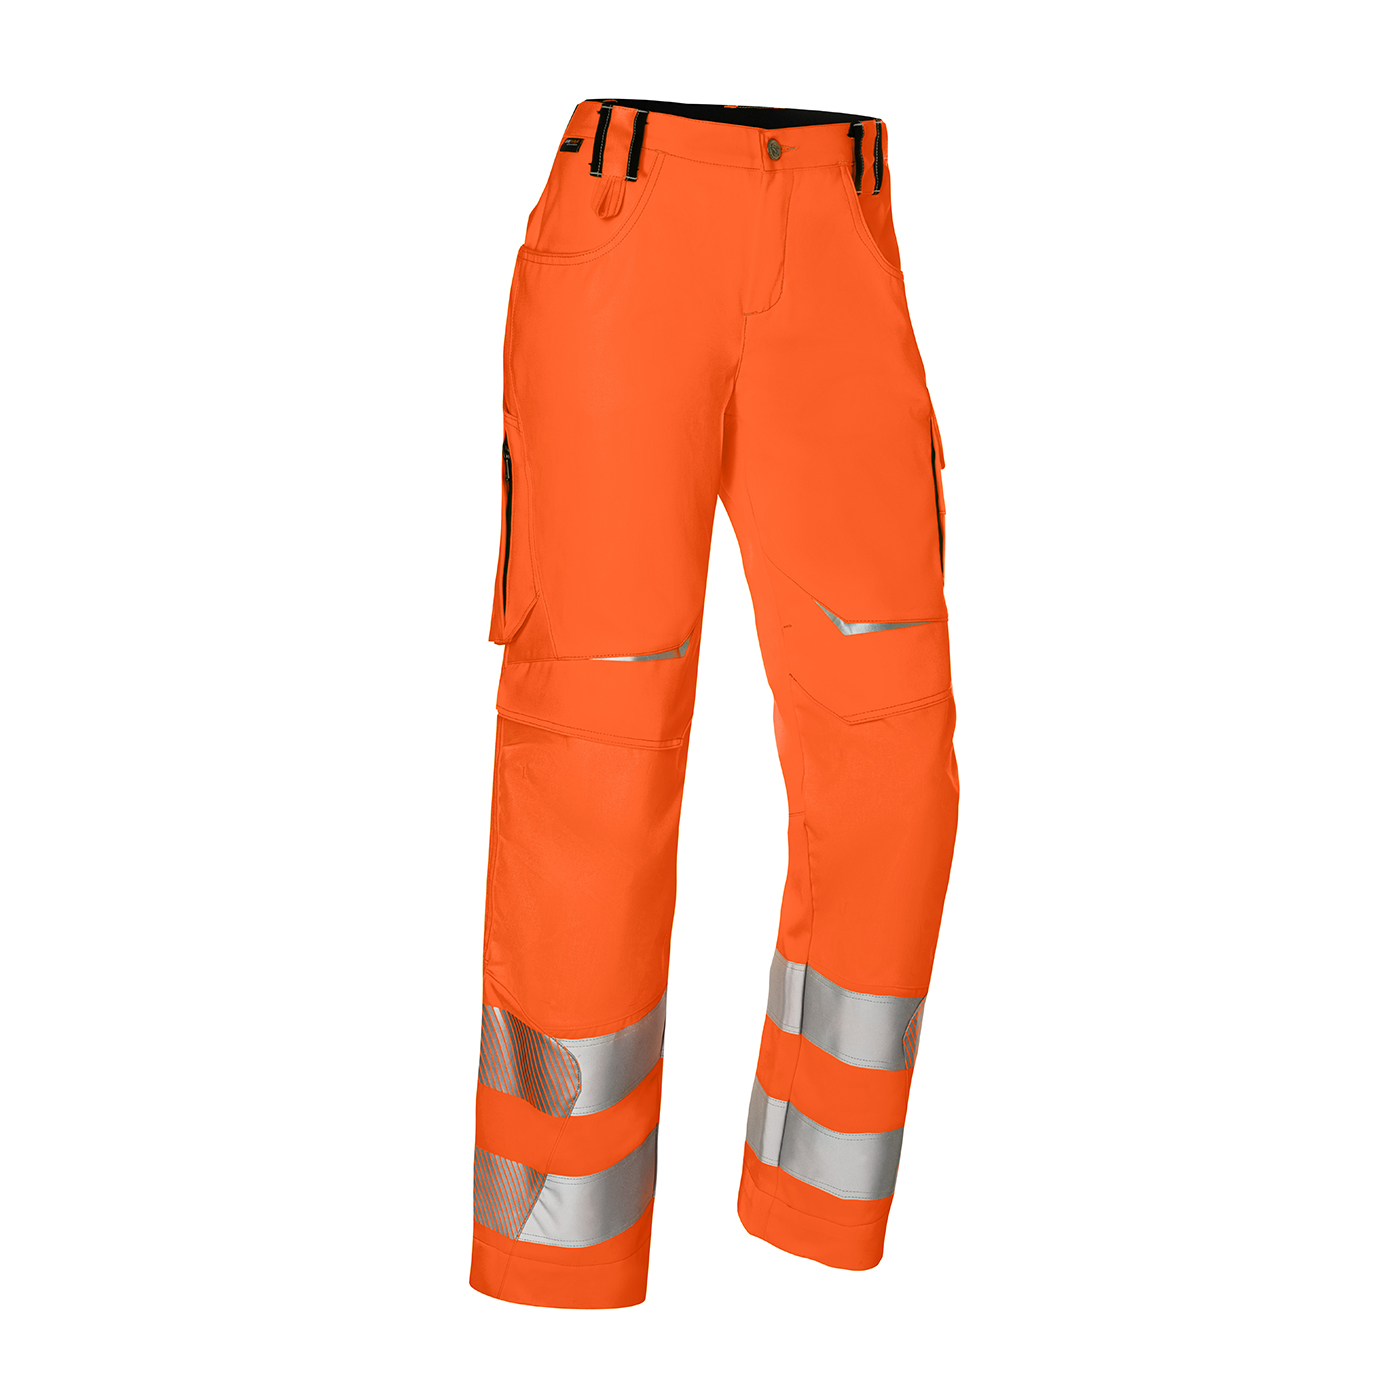 KÜBLER INNOVATIQ Ladie's Trousers PPE 2